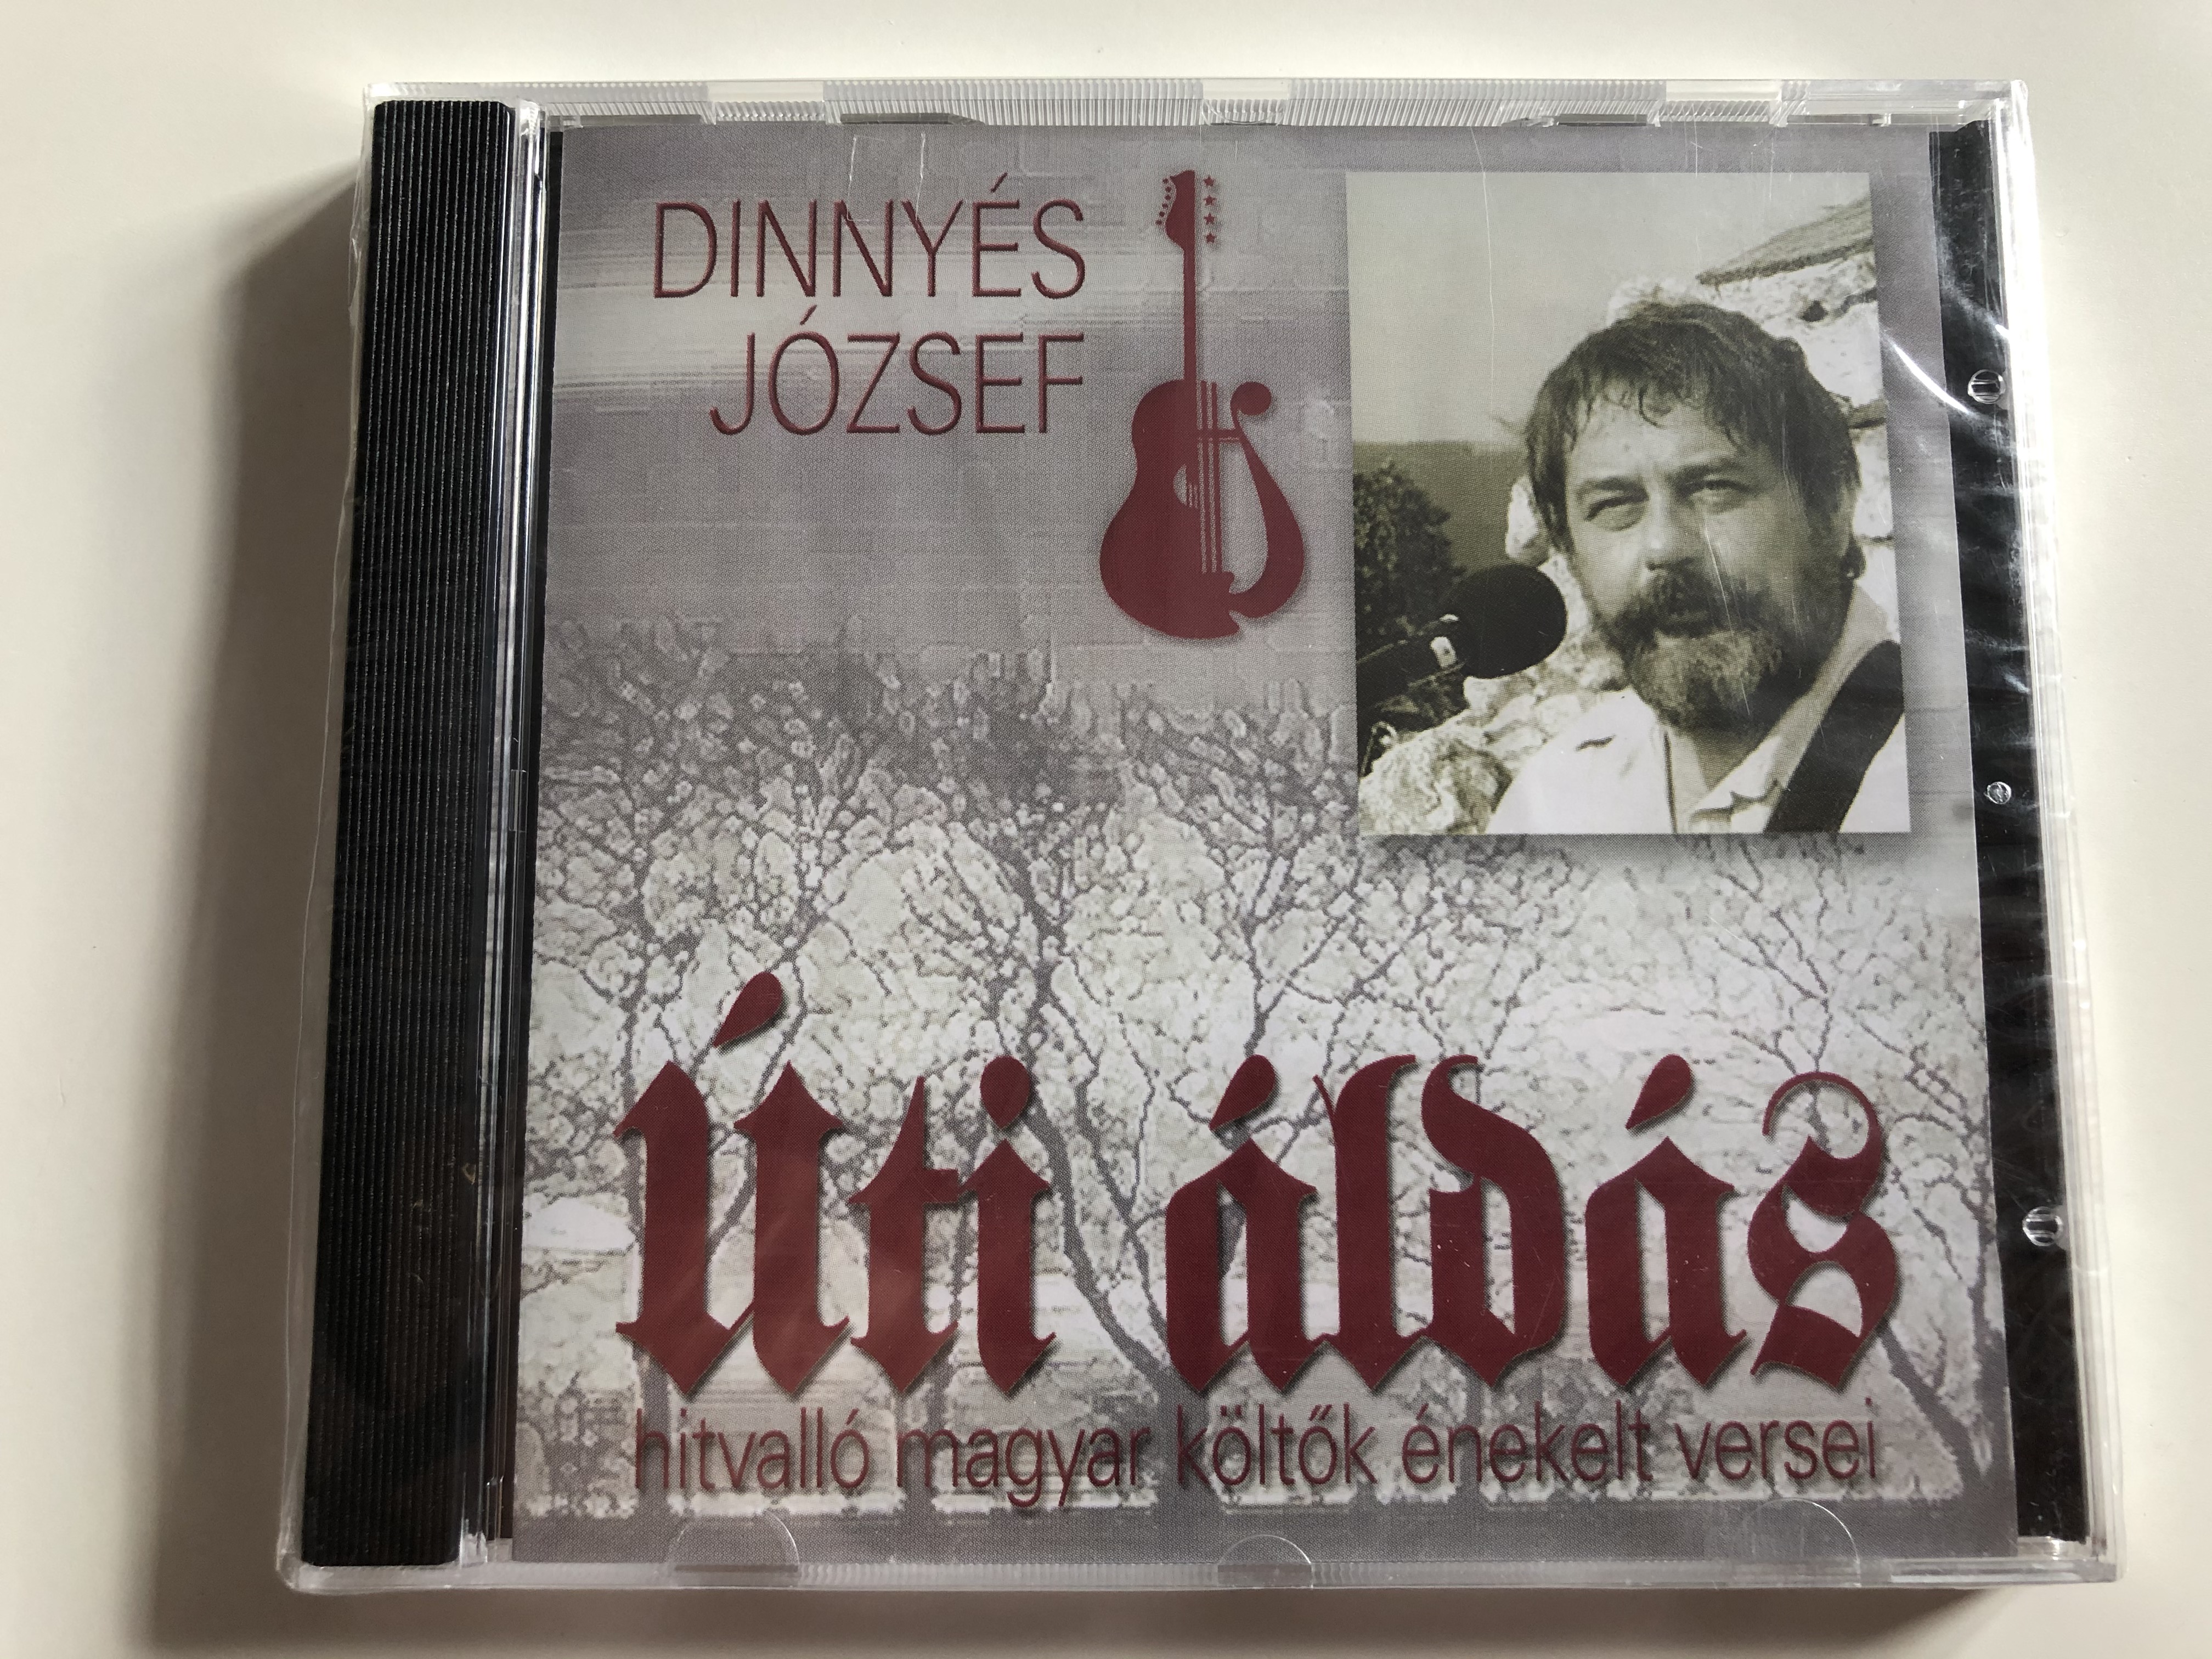 dinny-s-j-zsef-uti-aldas-hitvallo-magyar-koltok-enekelt-versei-dinnyes-jozsef-audio-cd-2003-1-.jpg